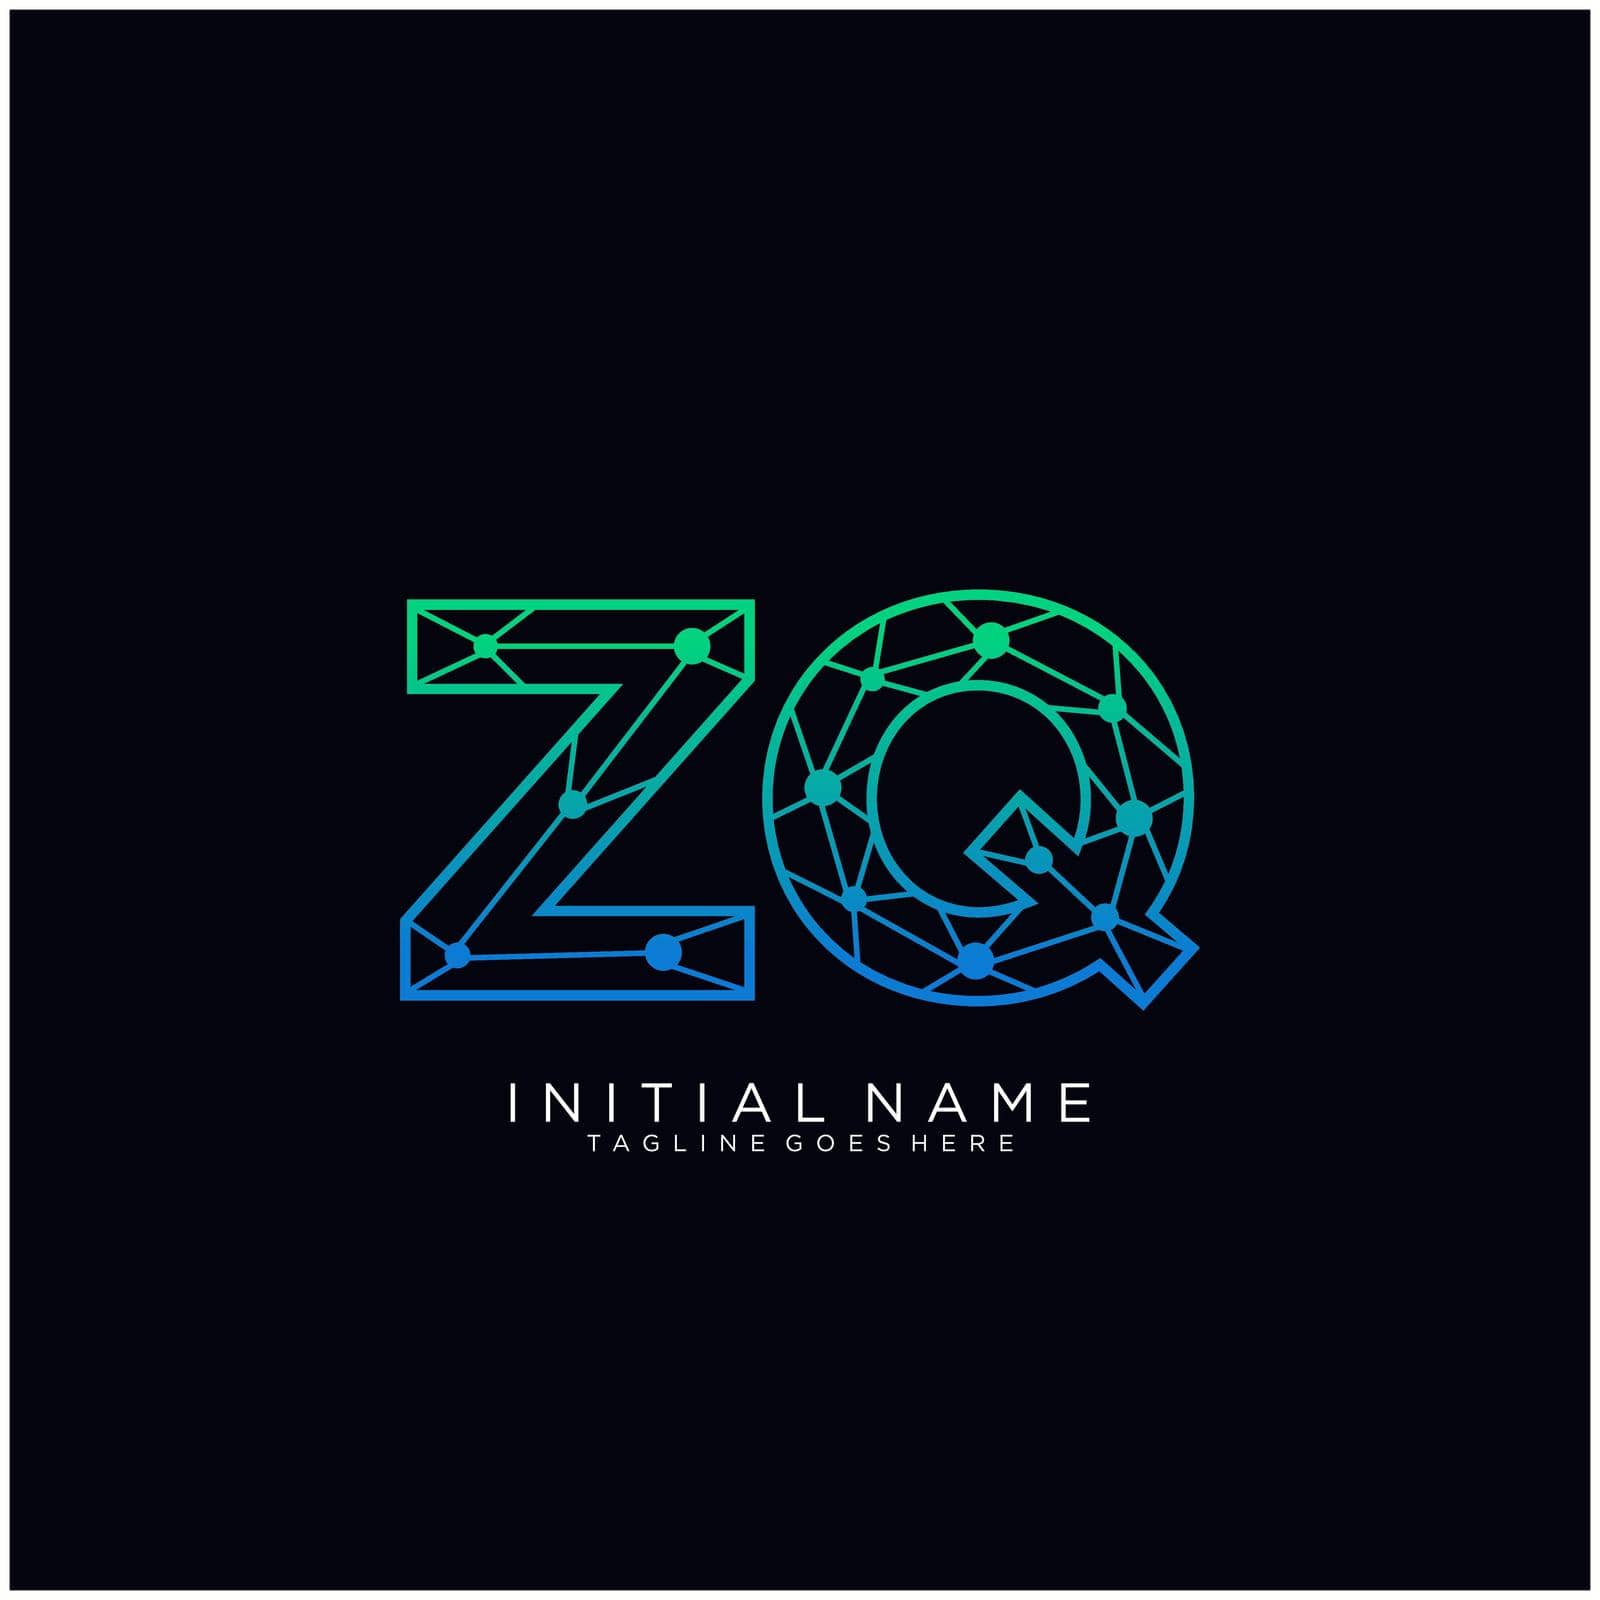 ZQ Letter logo icon design template elements by liaanniesatul